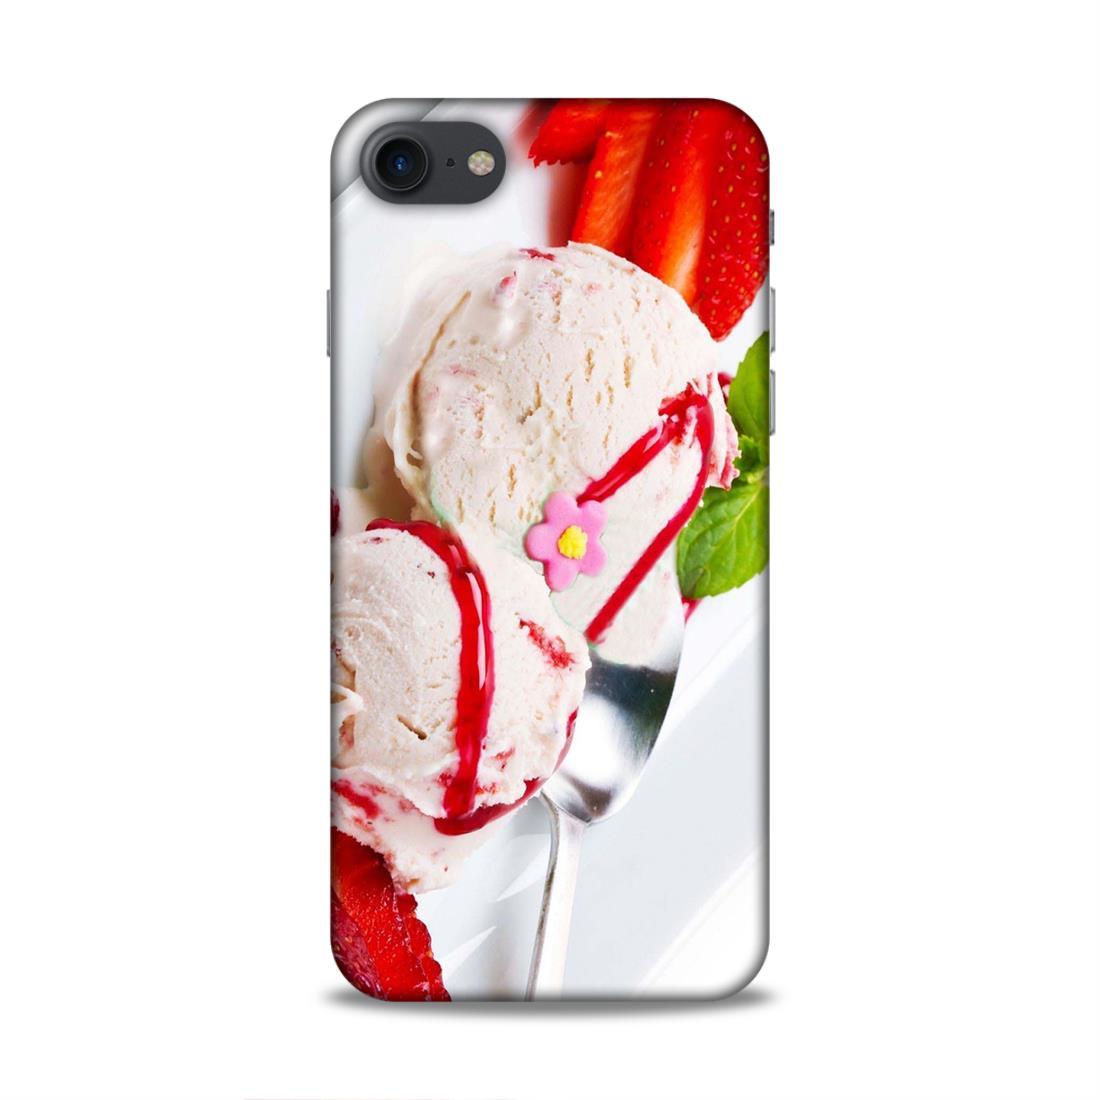 Icecream Love iPhone 8 Mobile Cover